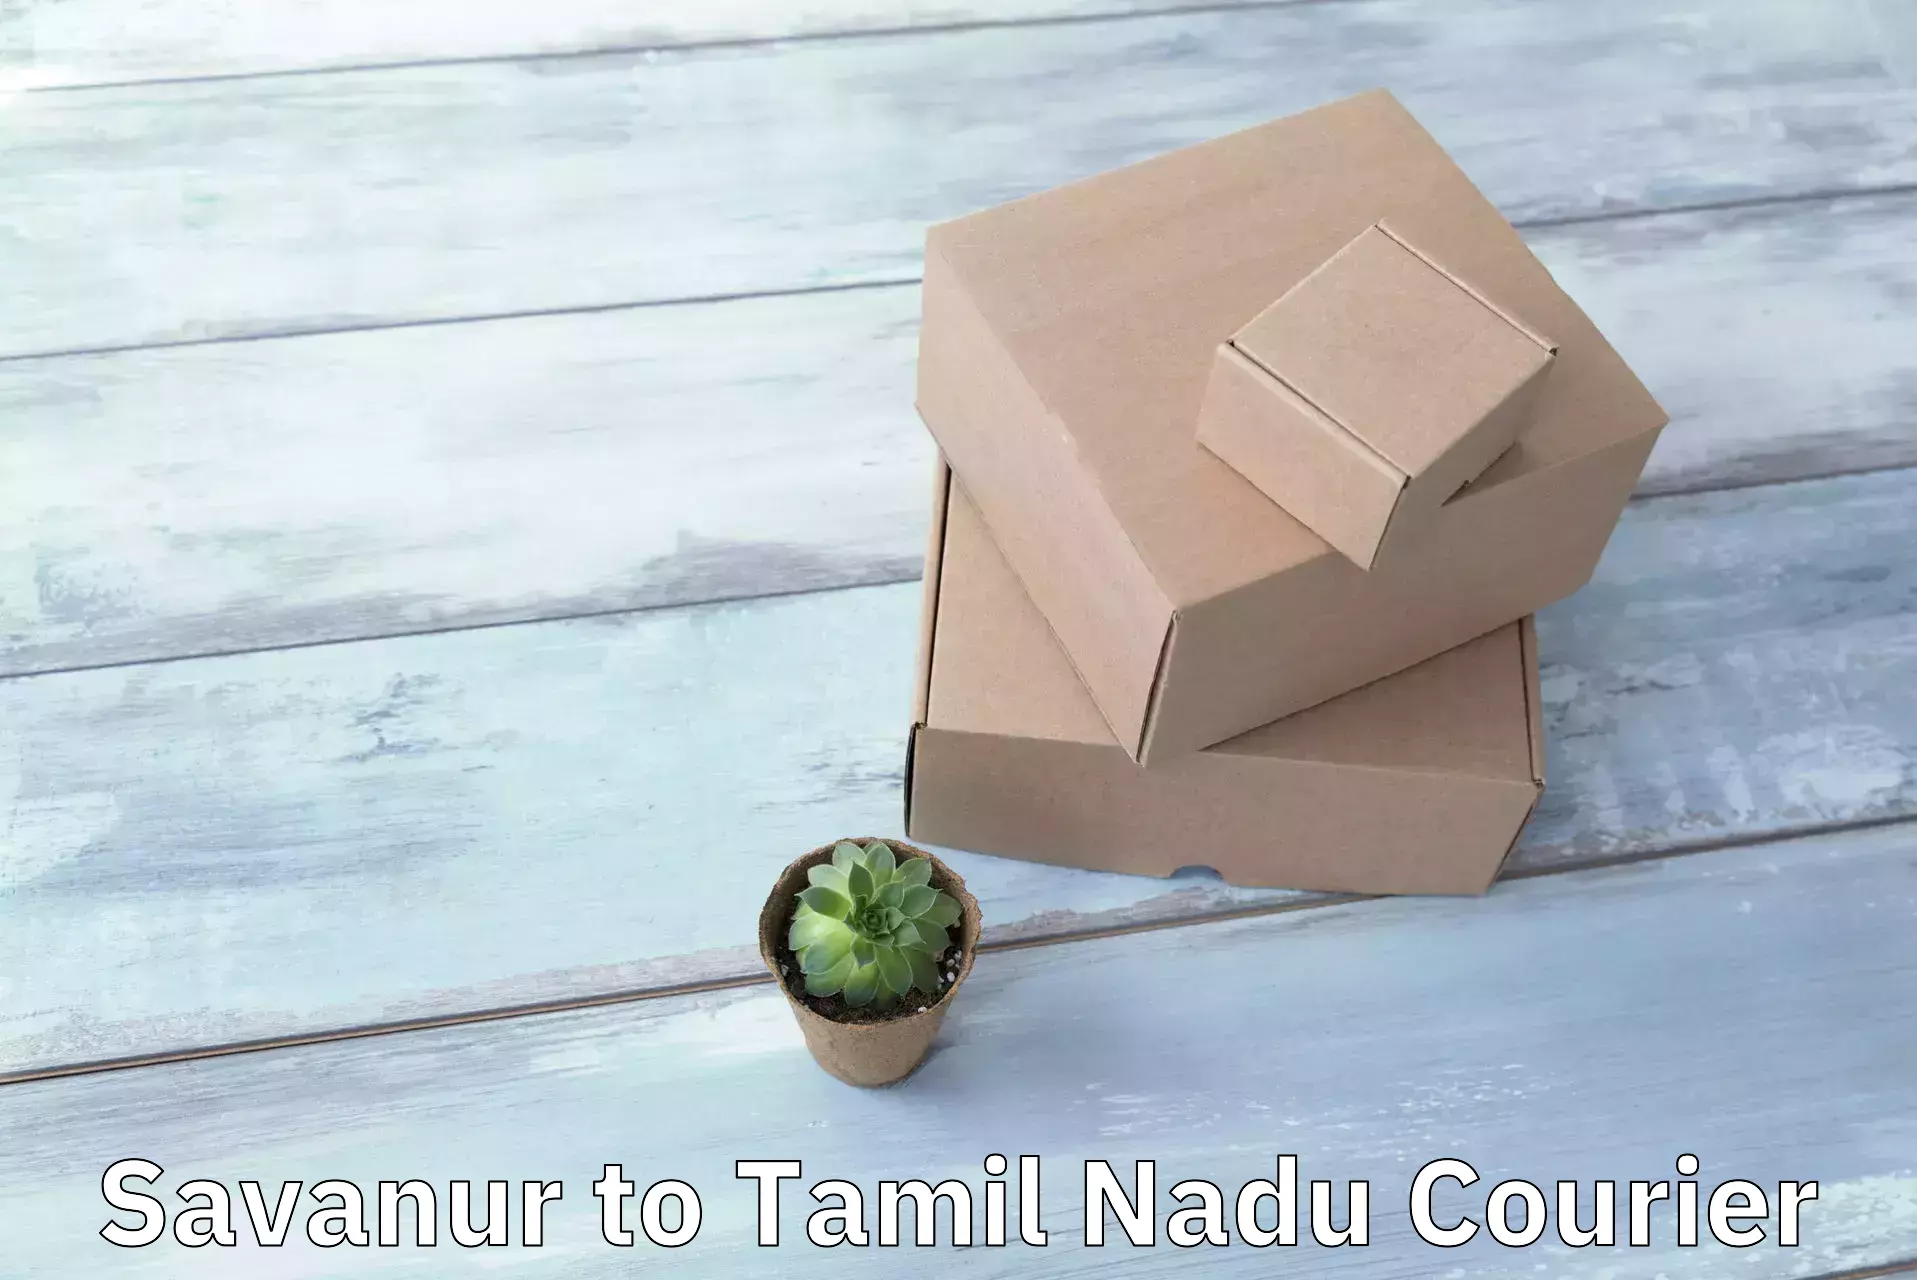 Enhanced tracking features Savanur to Tamil Nadu